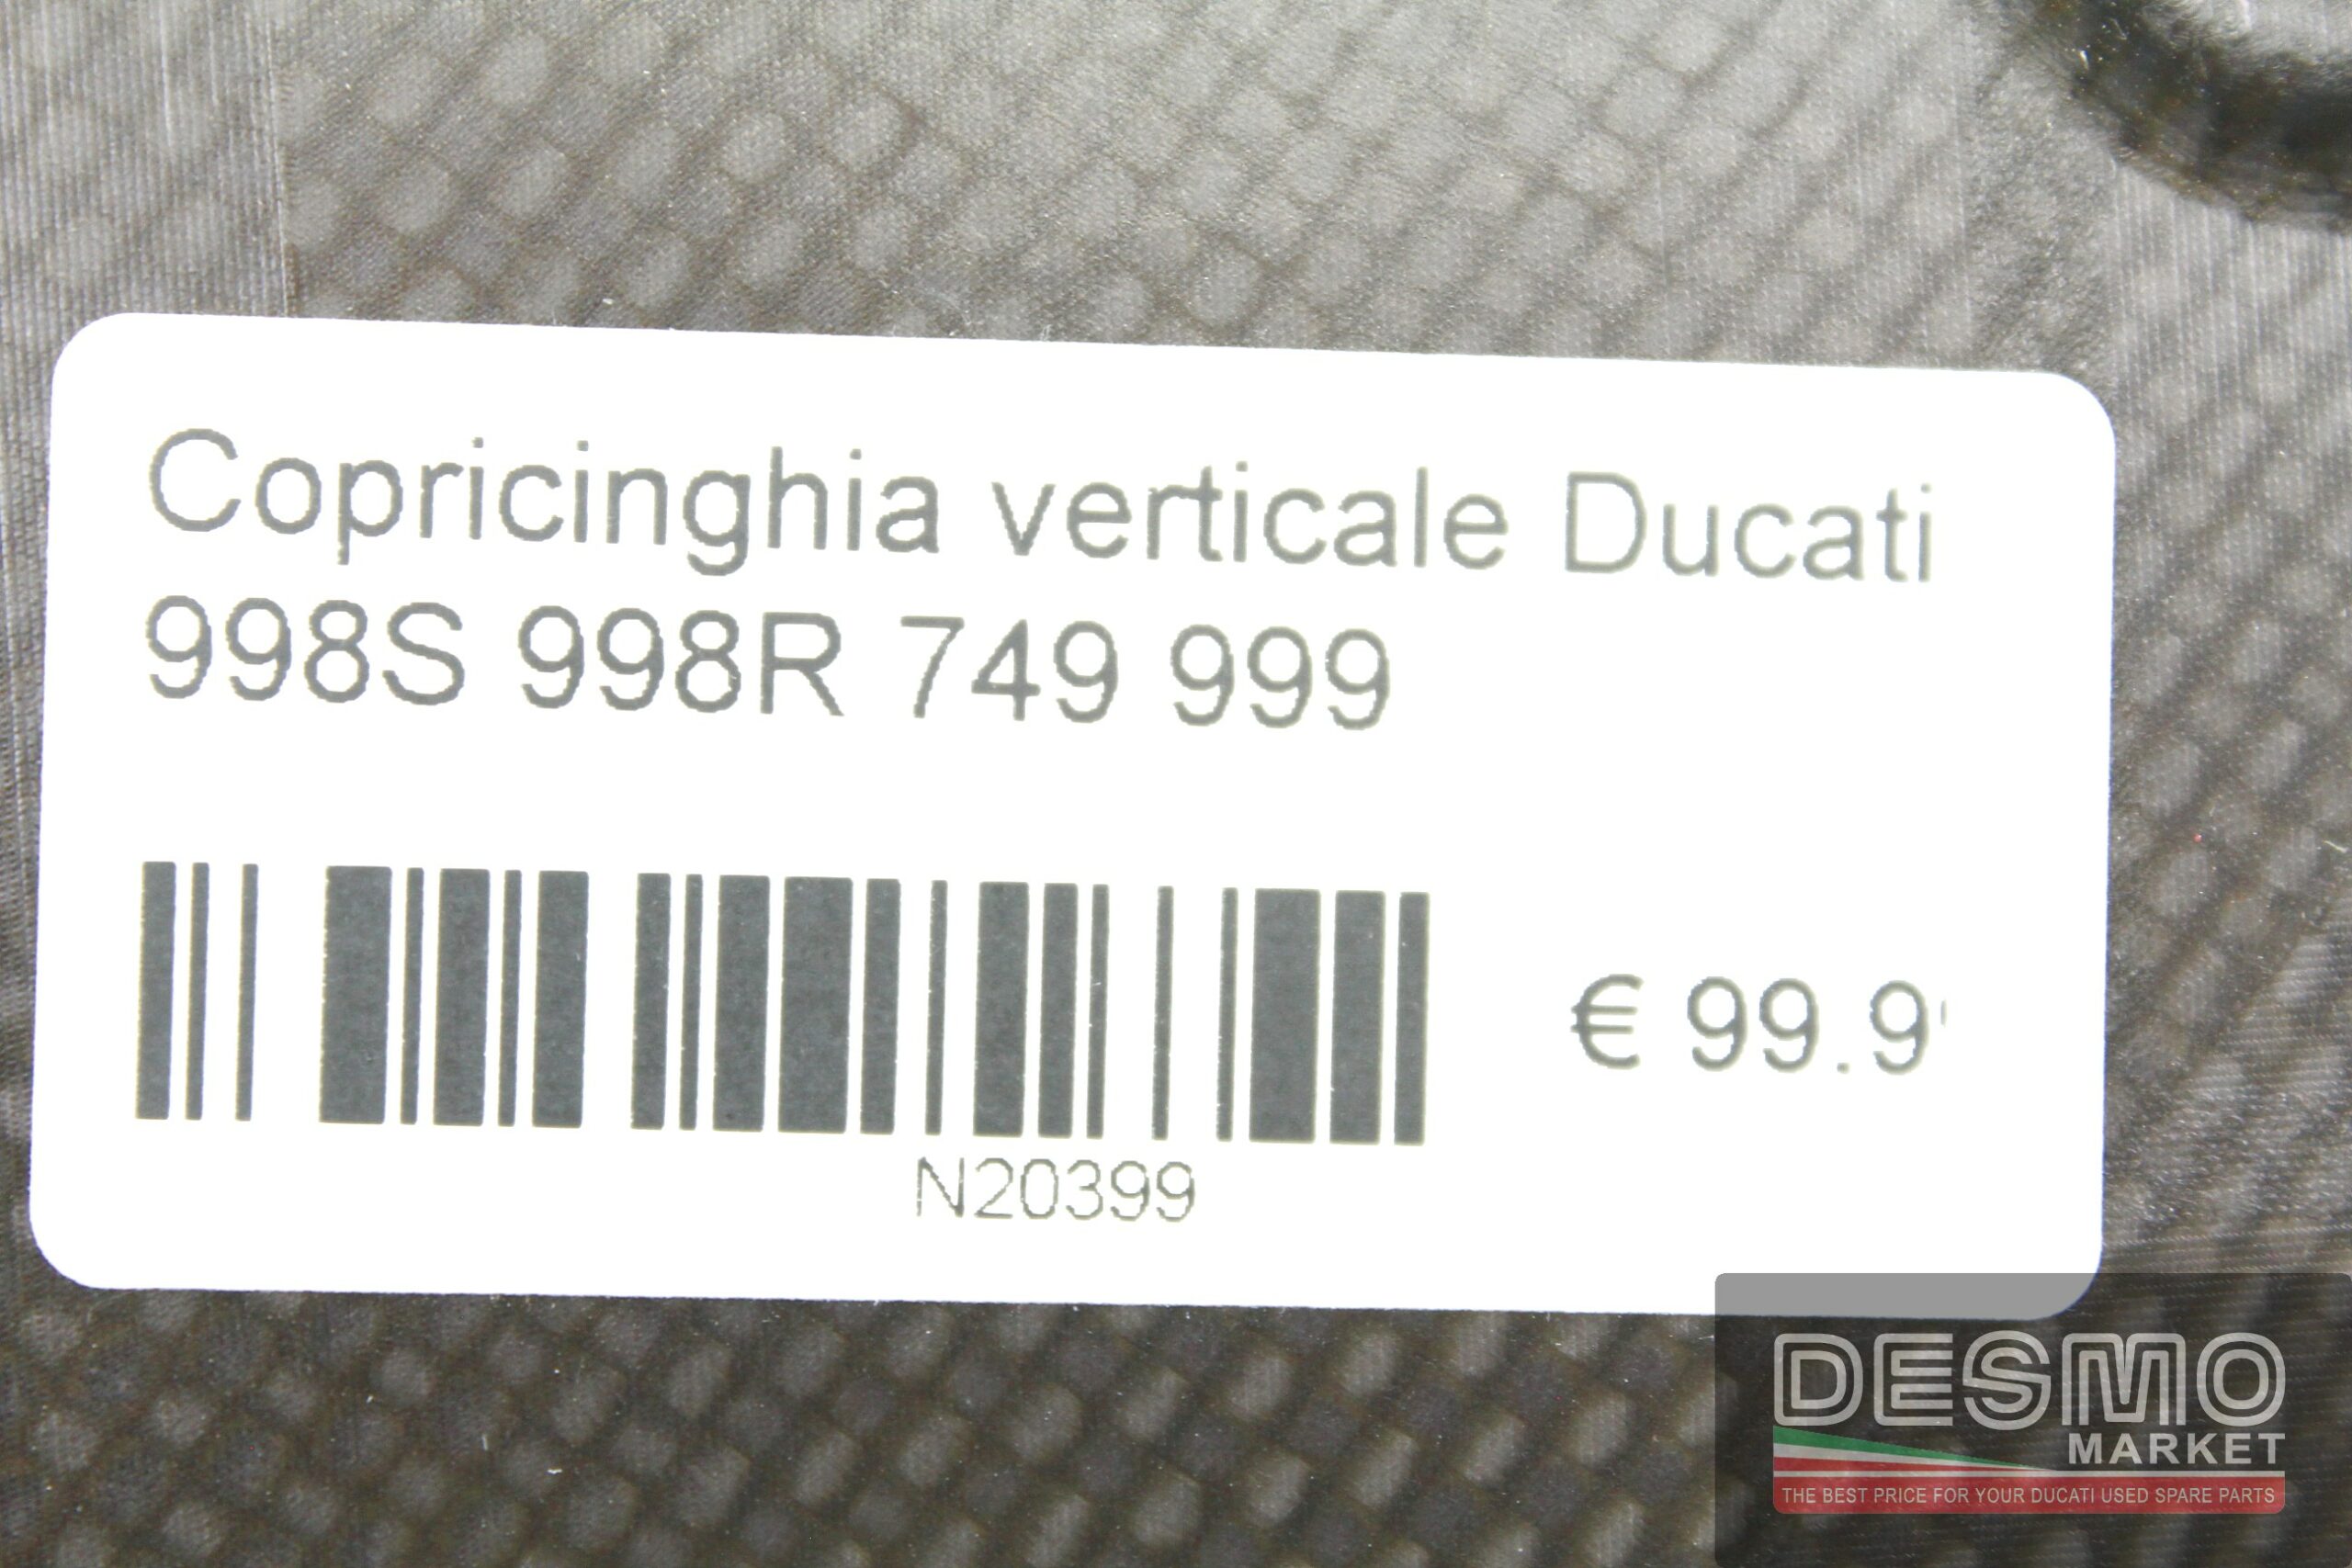 Copricinghia verticale Ducati 998S 998R 749 999